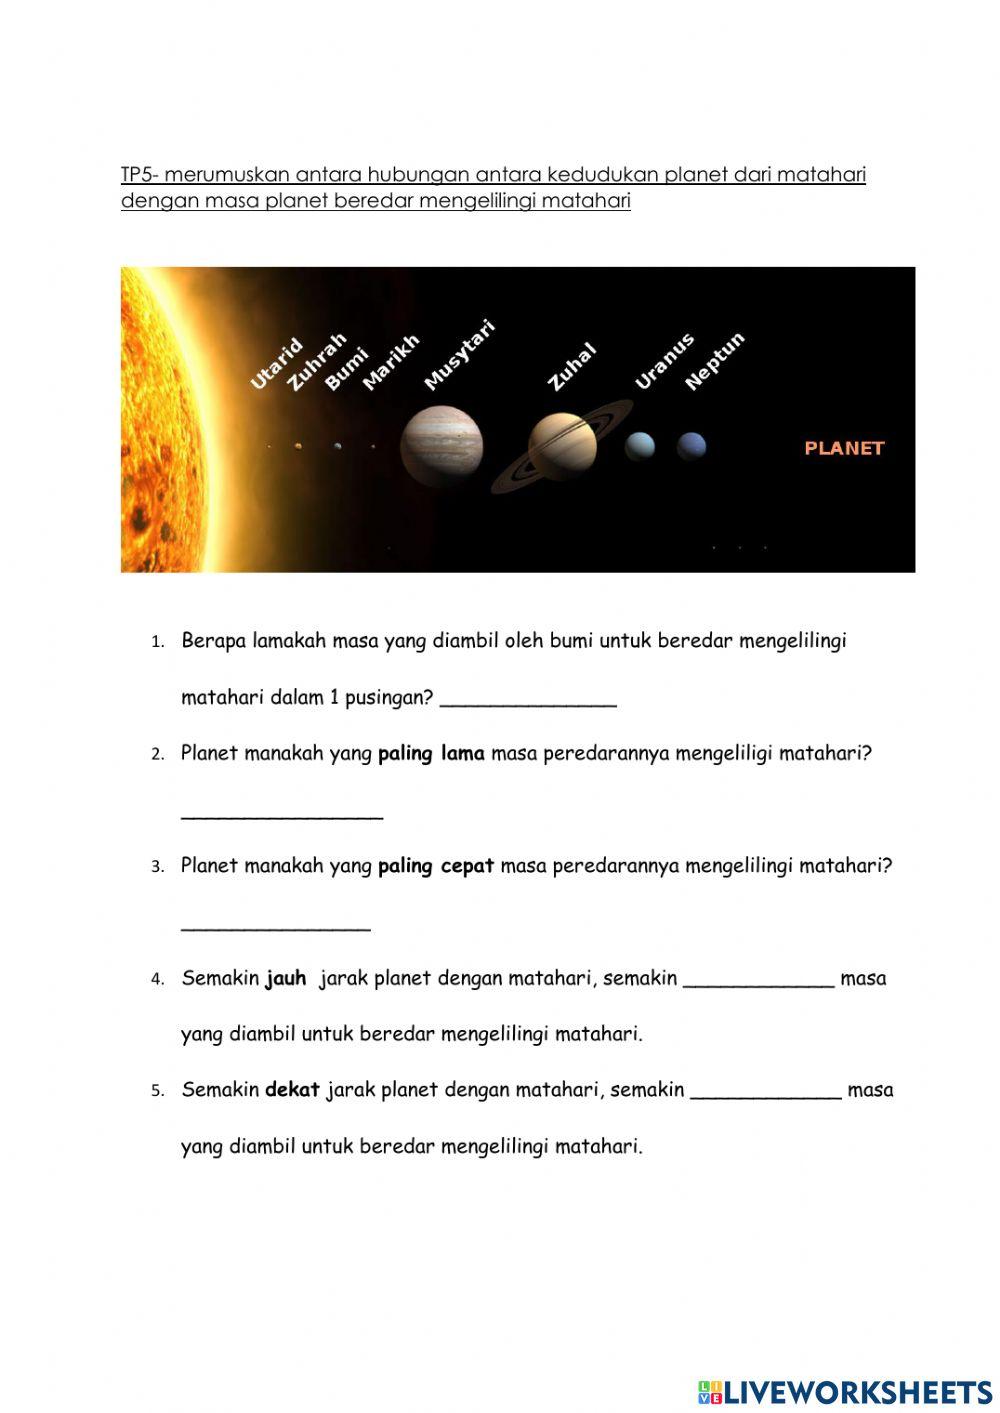 Sistem suria